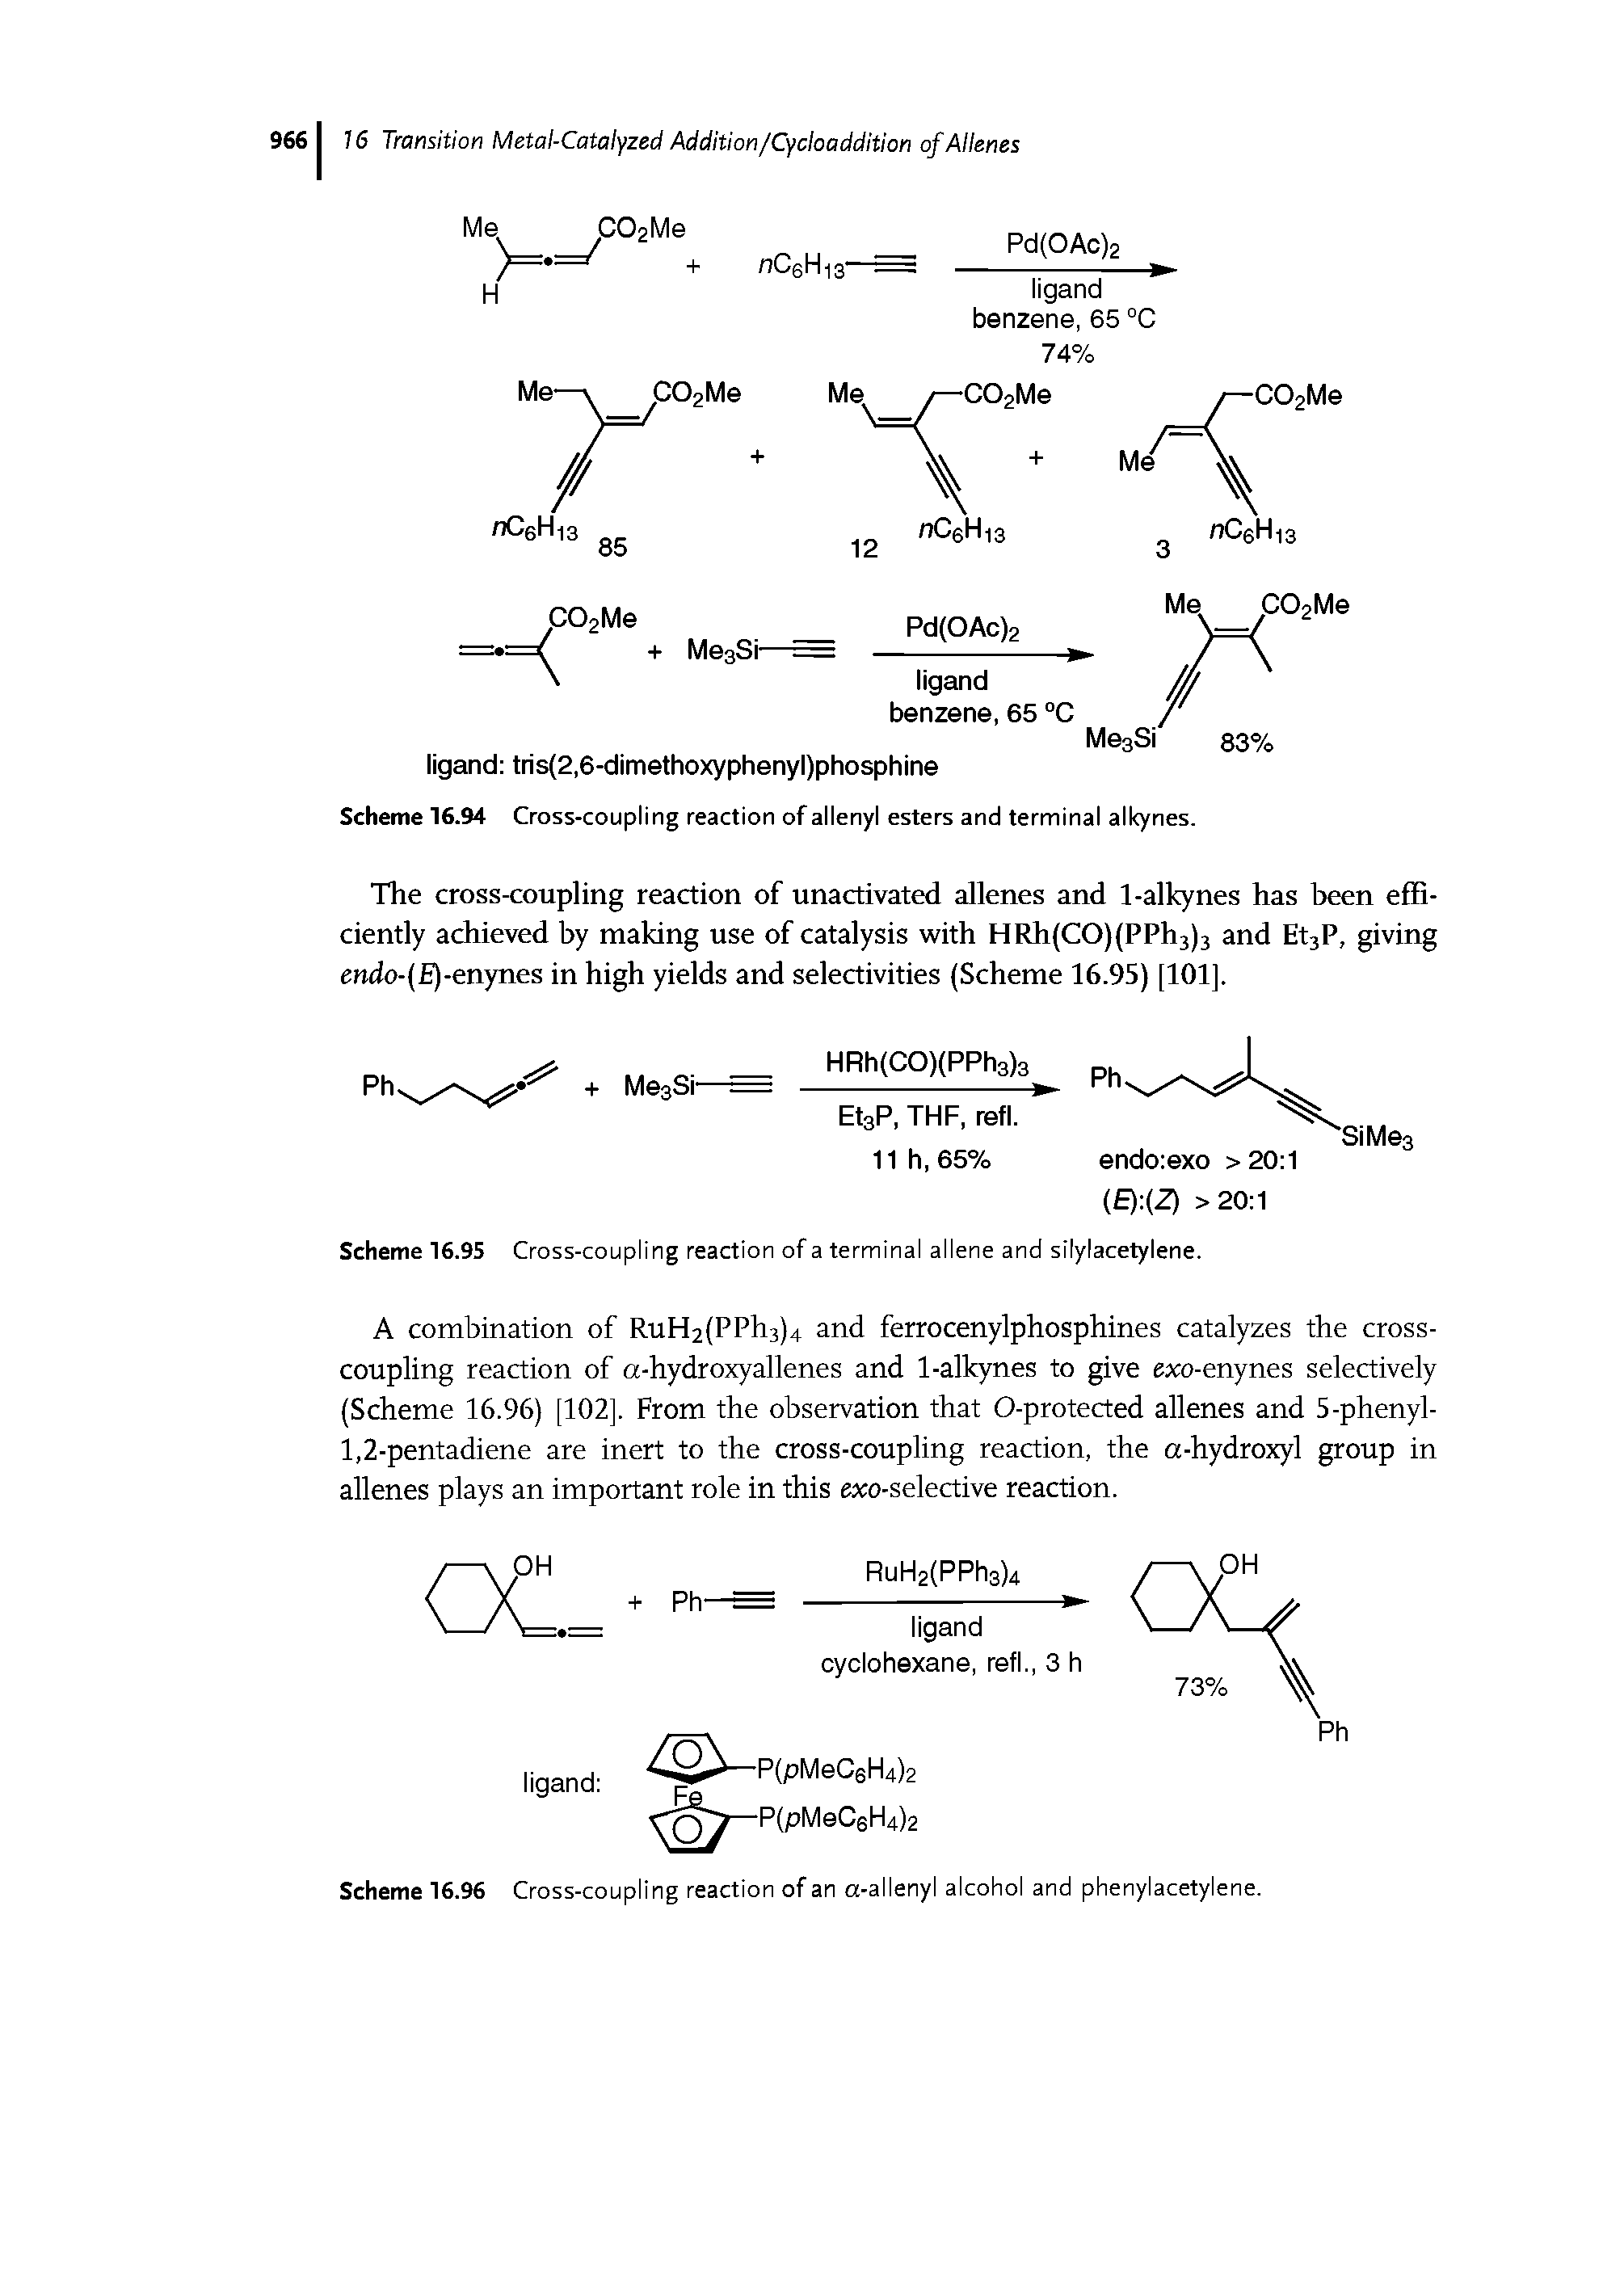 Scheme 16.95 Cross-coupling reaction of a terminal allene and silylacetylene.